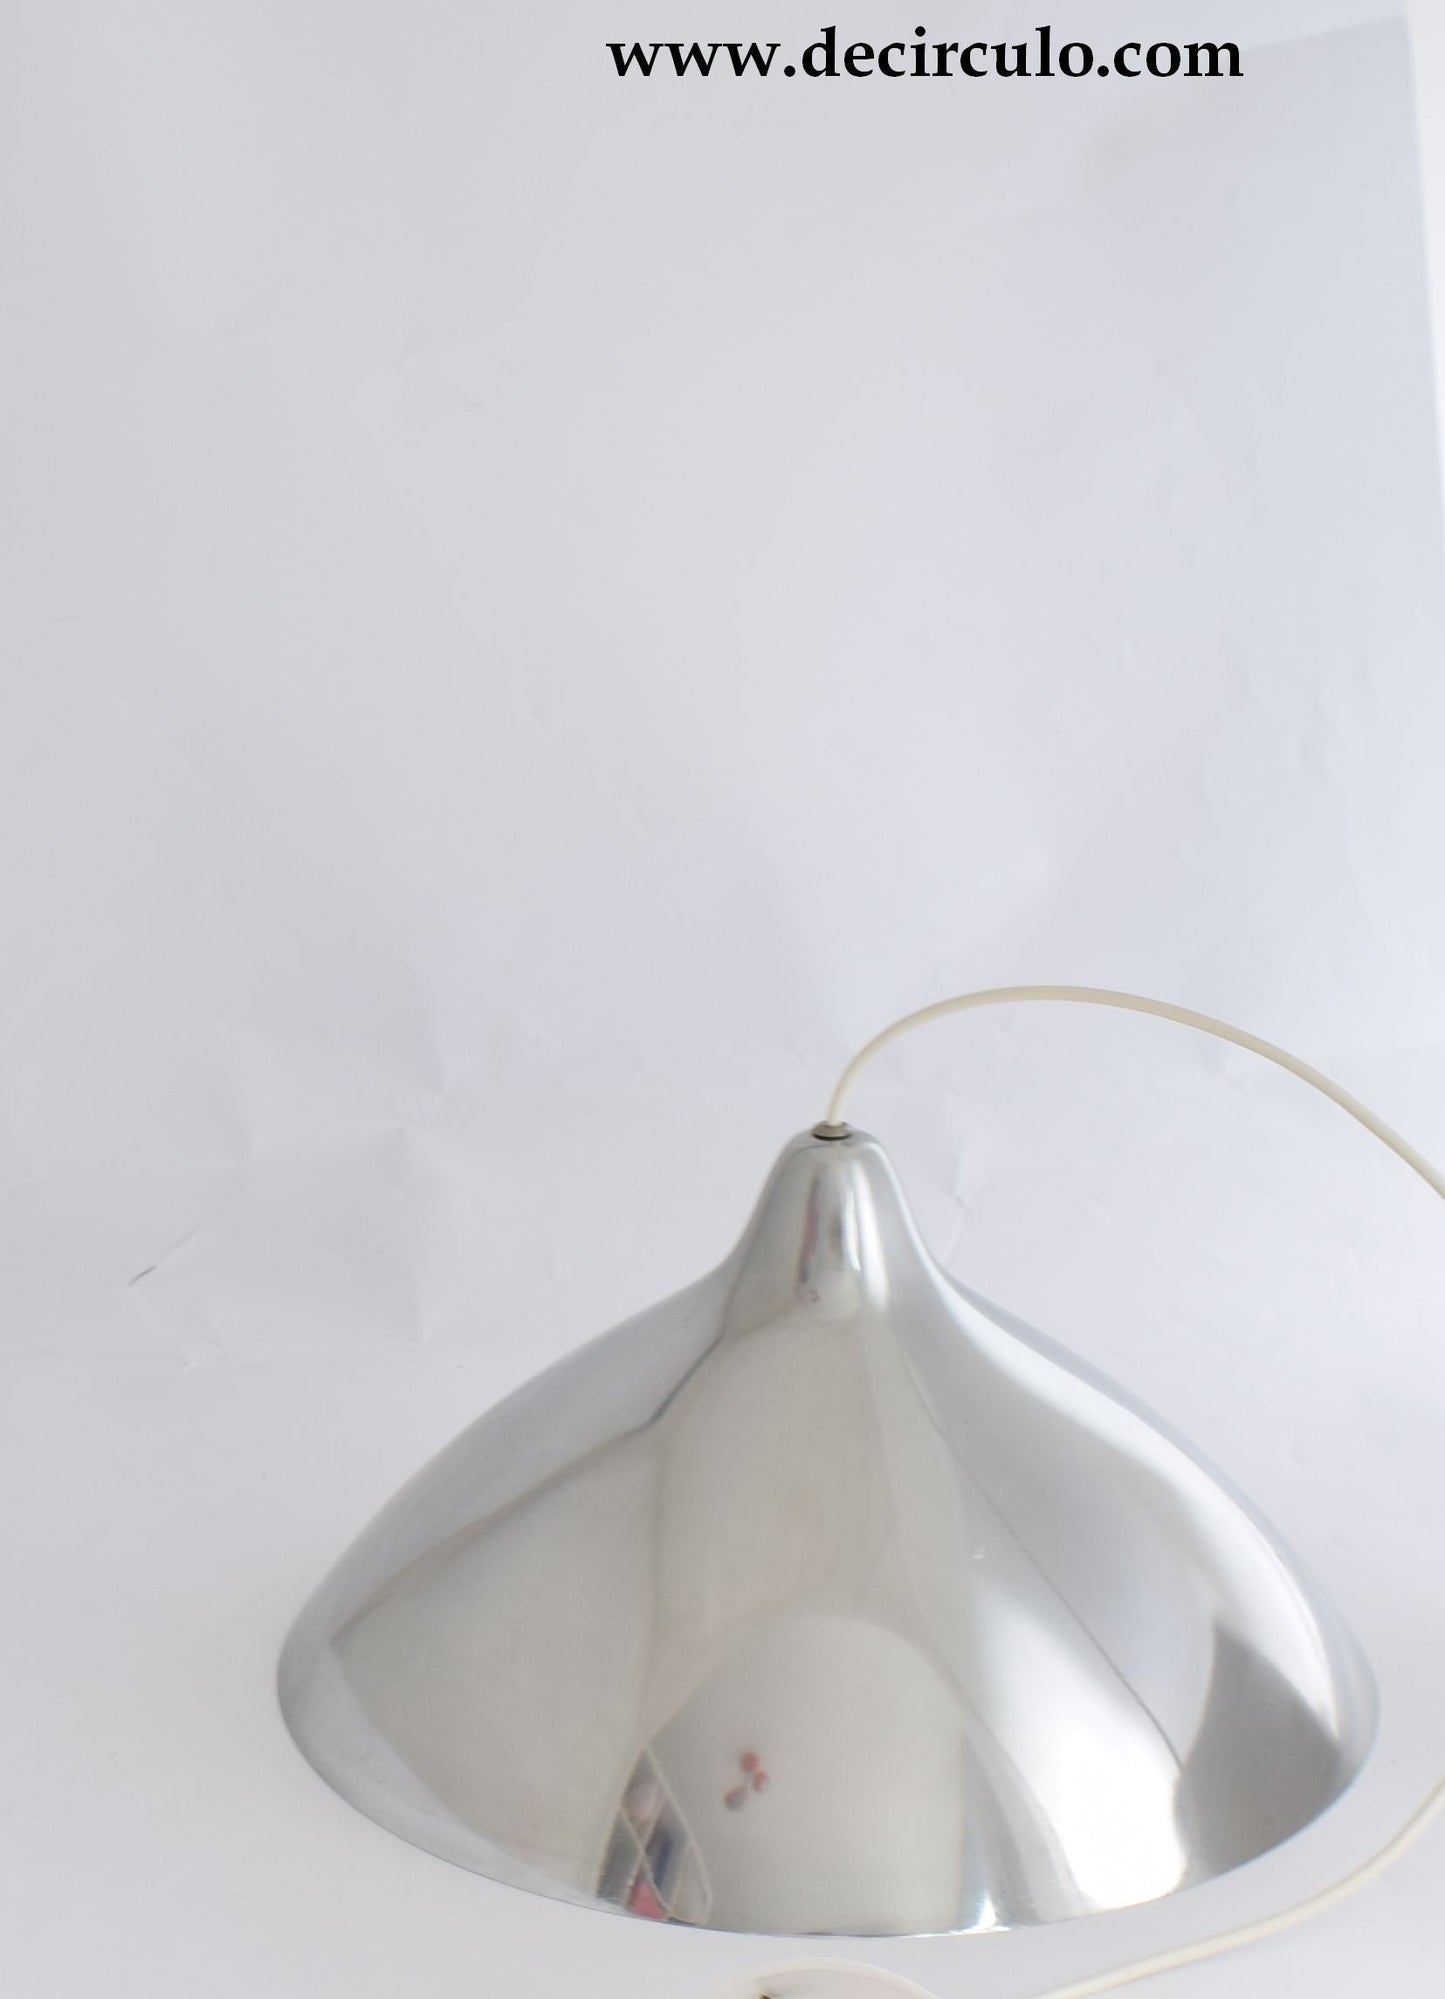 Stockmann Orno diseño Lisa Johansson-Pape lámpara colgante de aluminio fabricada en finlandia 1950-1959